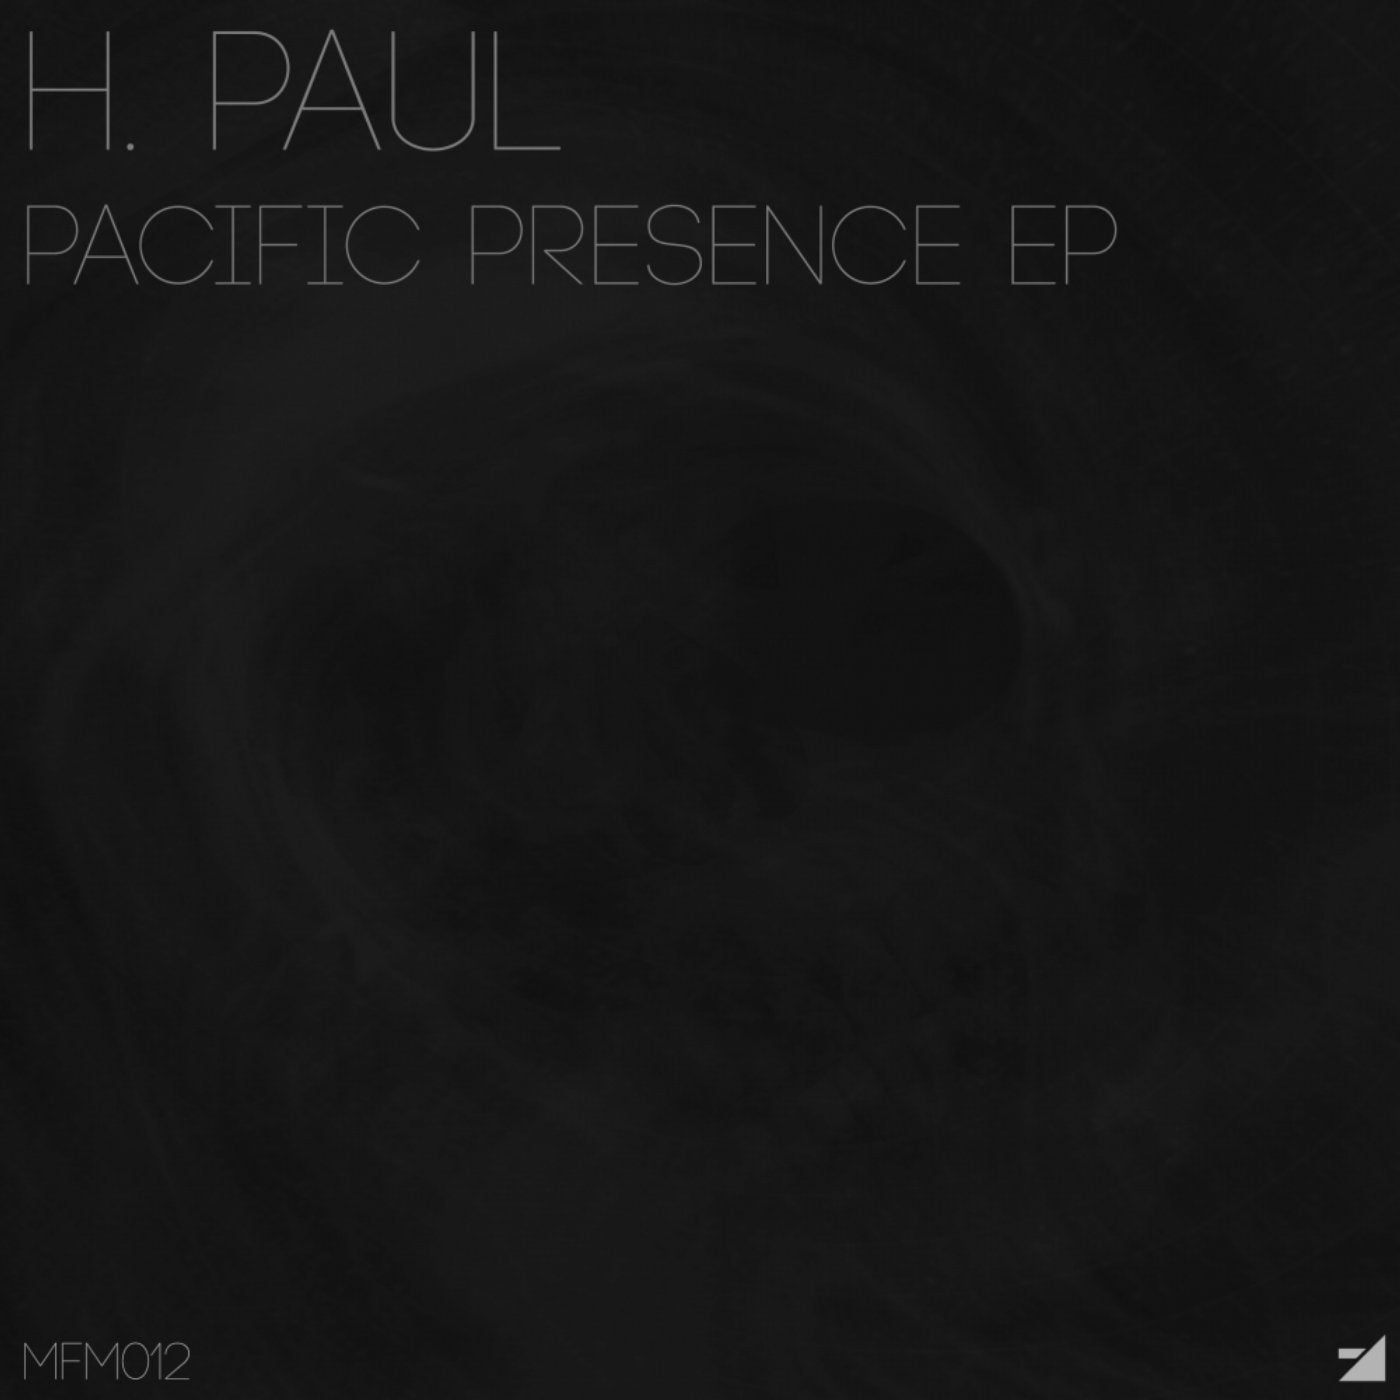 Pacific Presence